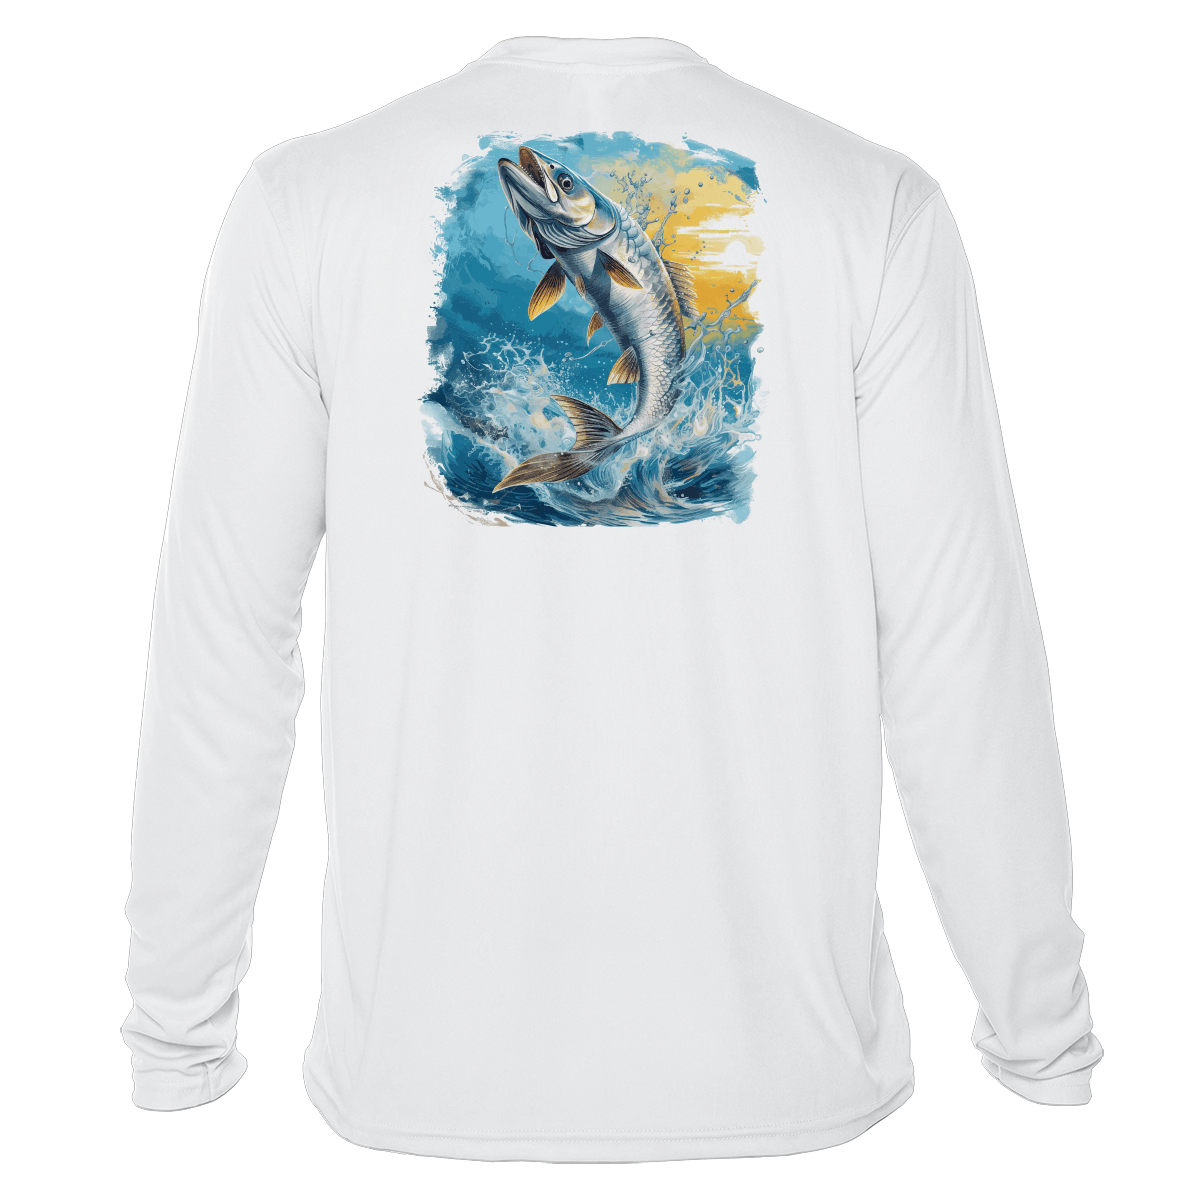 Tarpon Performance Fishing Shirt - Long Sleeve Performance Fishing Shirt - UPF 50+, Snag Resistant, Sun Shirt - Small - Seatec Outfitters